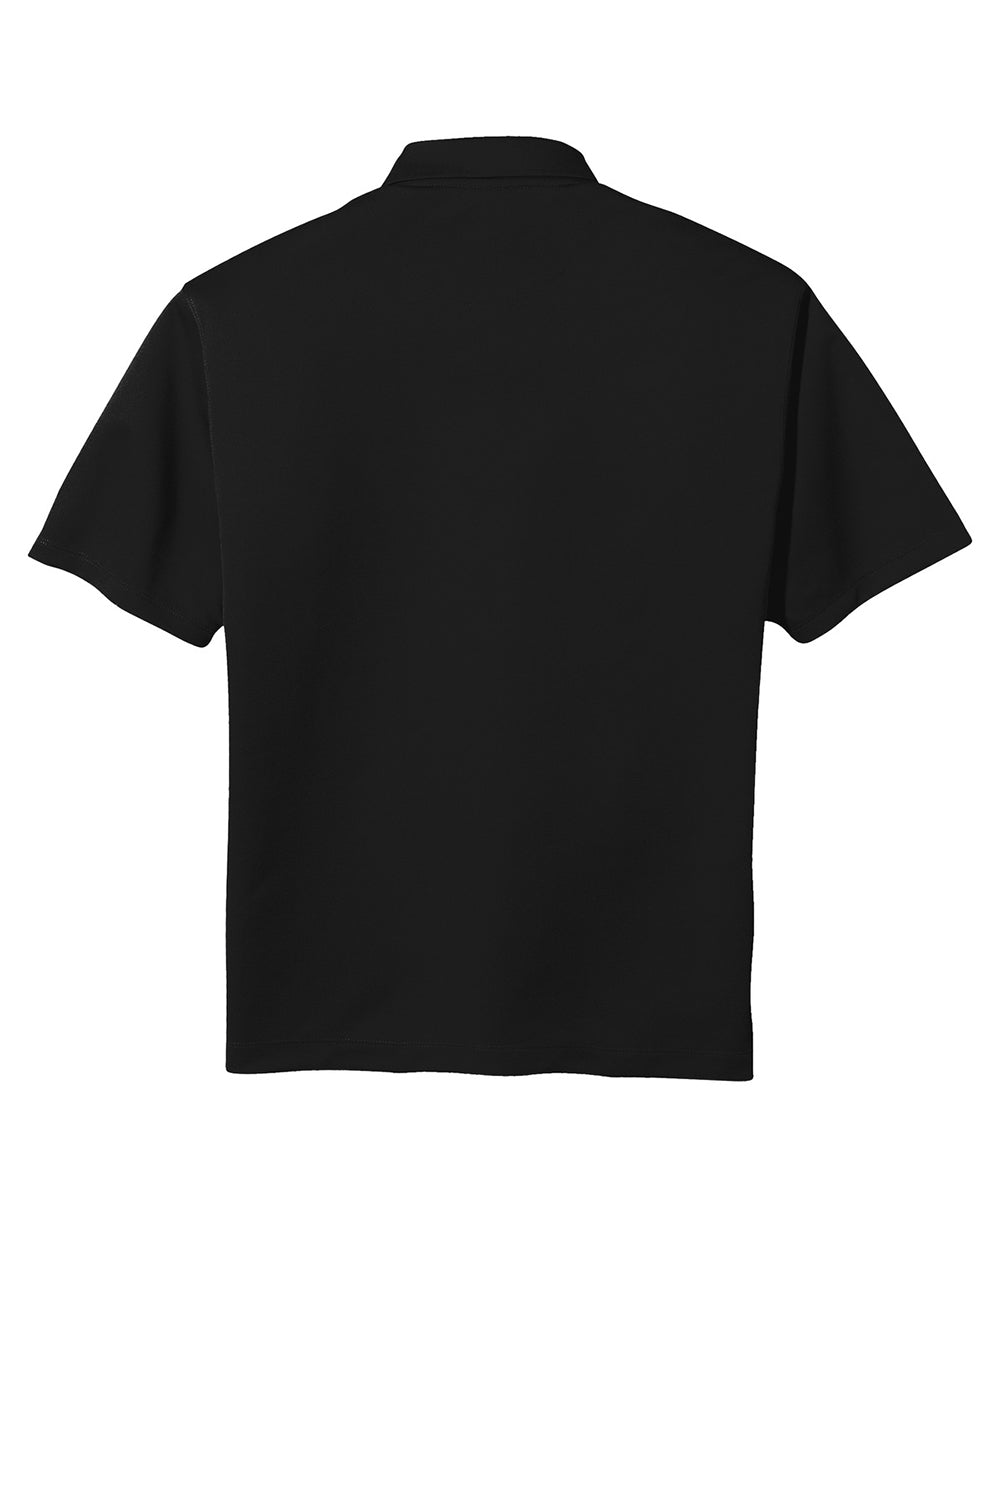 Nike 203690 Mens Tech Basic Dri-Fit Moisture Wicking Short Sleeve Polo Shirt Black Flat Back